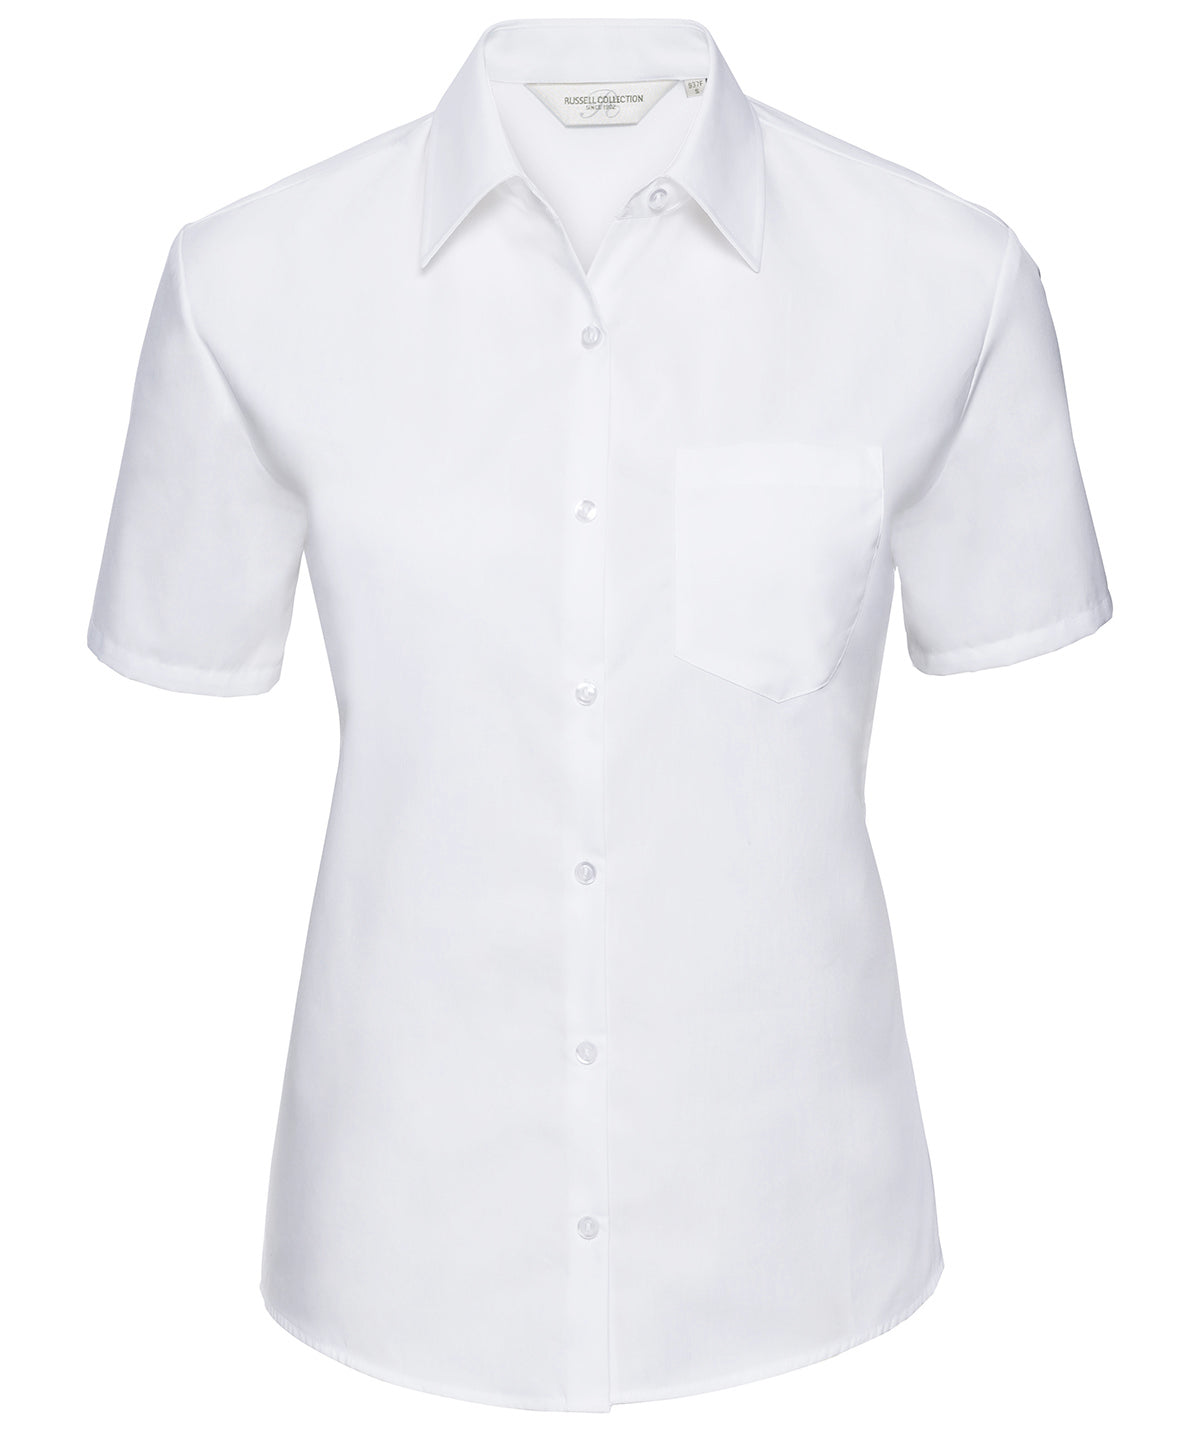 Bolir - Women's Short Sleeve Pure Cotton Easycare Poplin Shirt